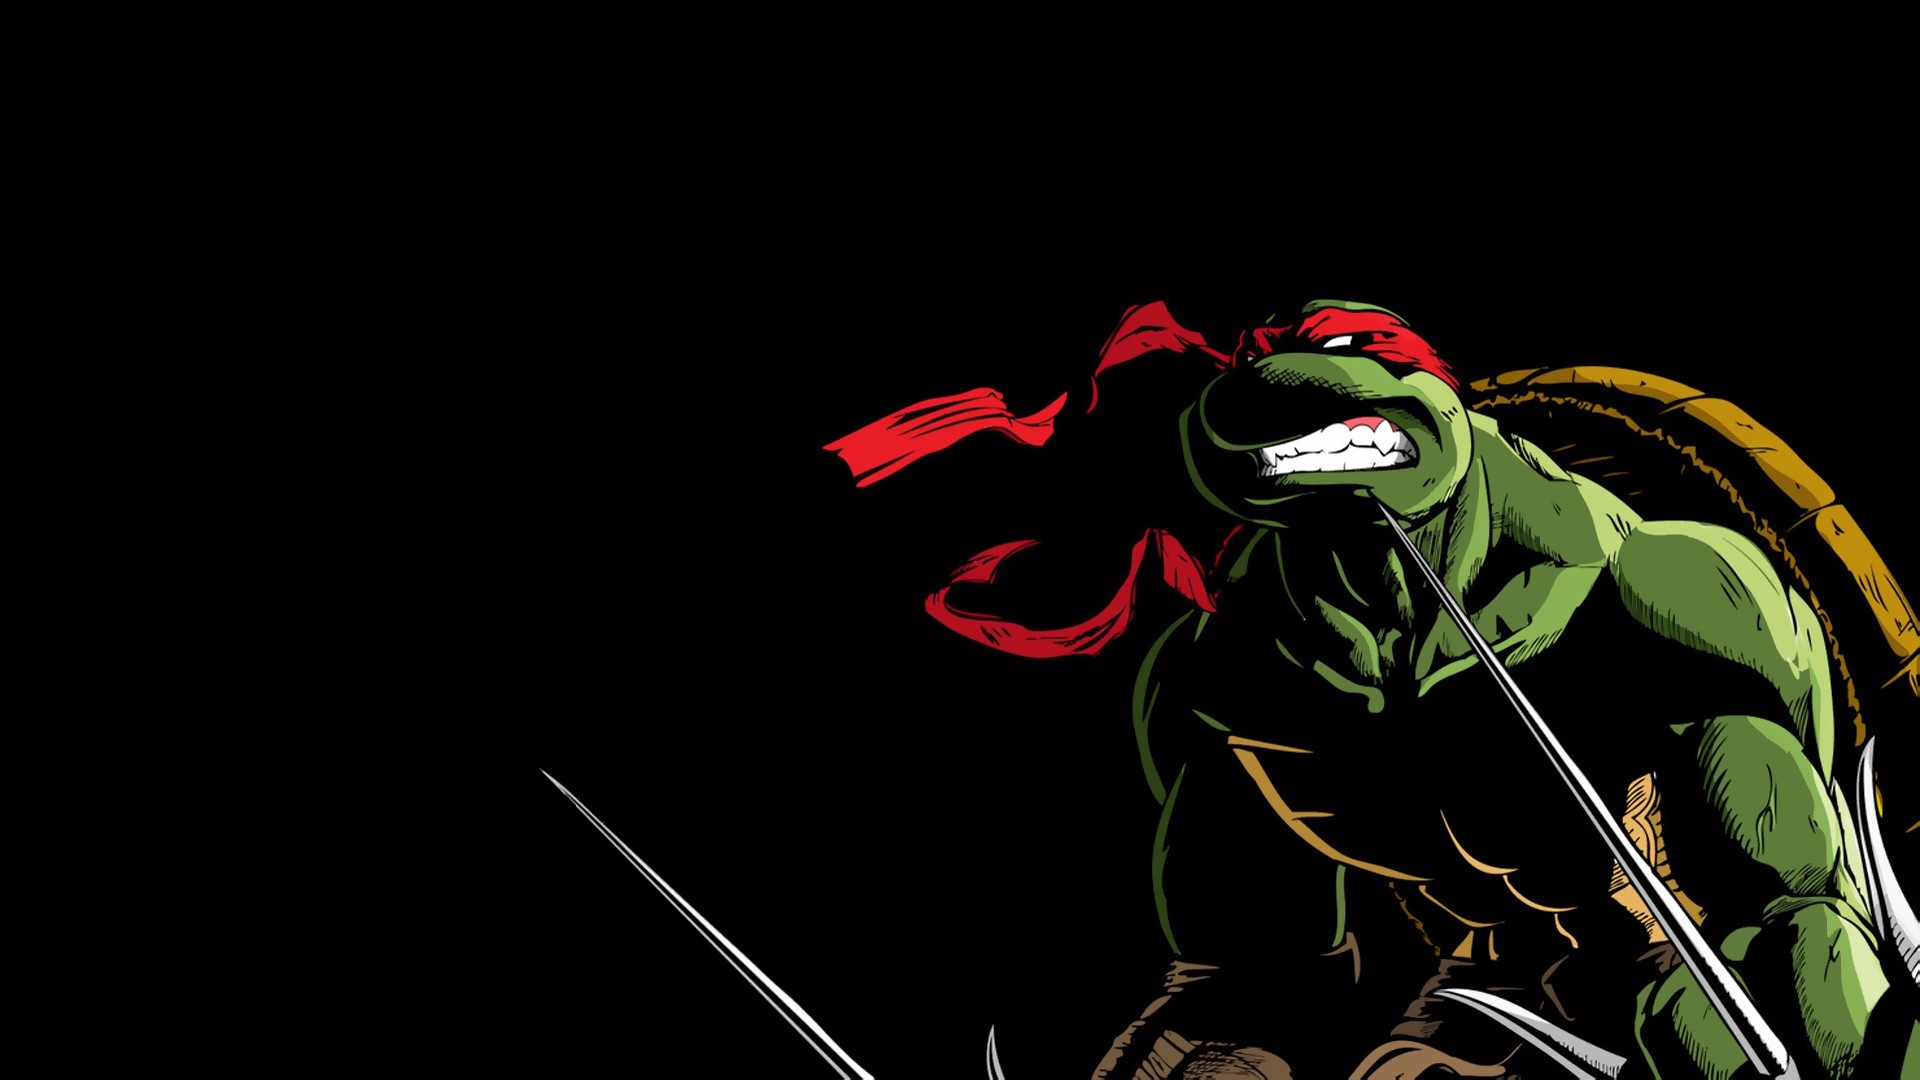 Teenage mutant ninja turtles raphael desktop wallpapers